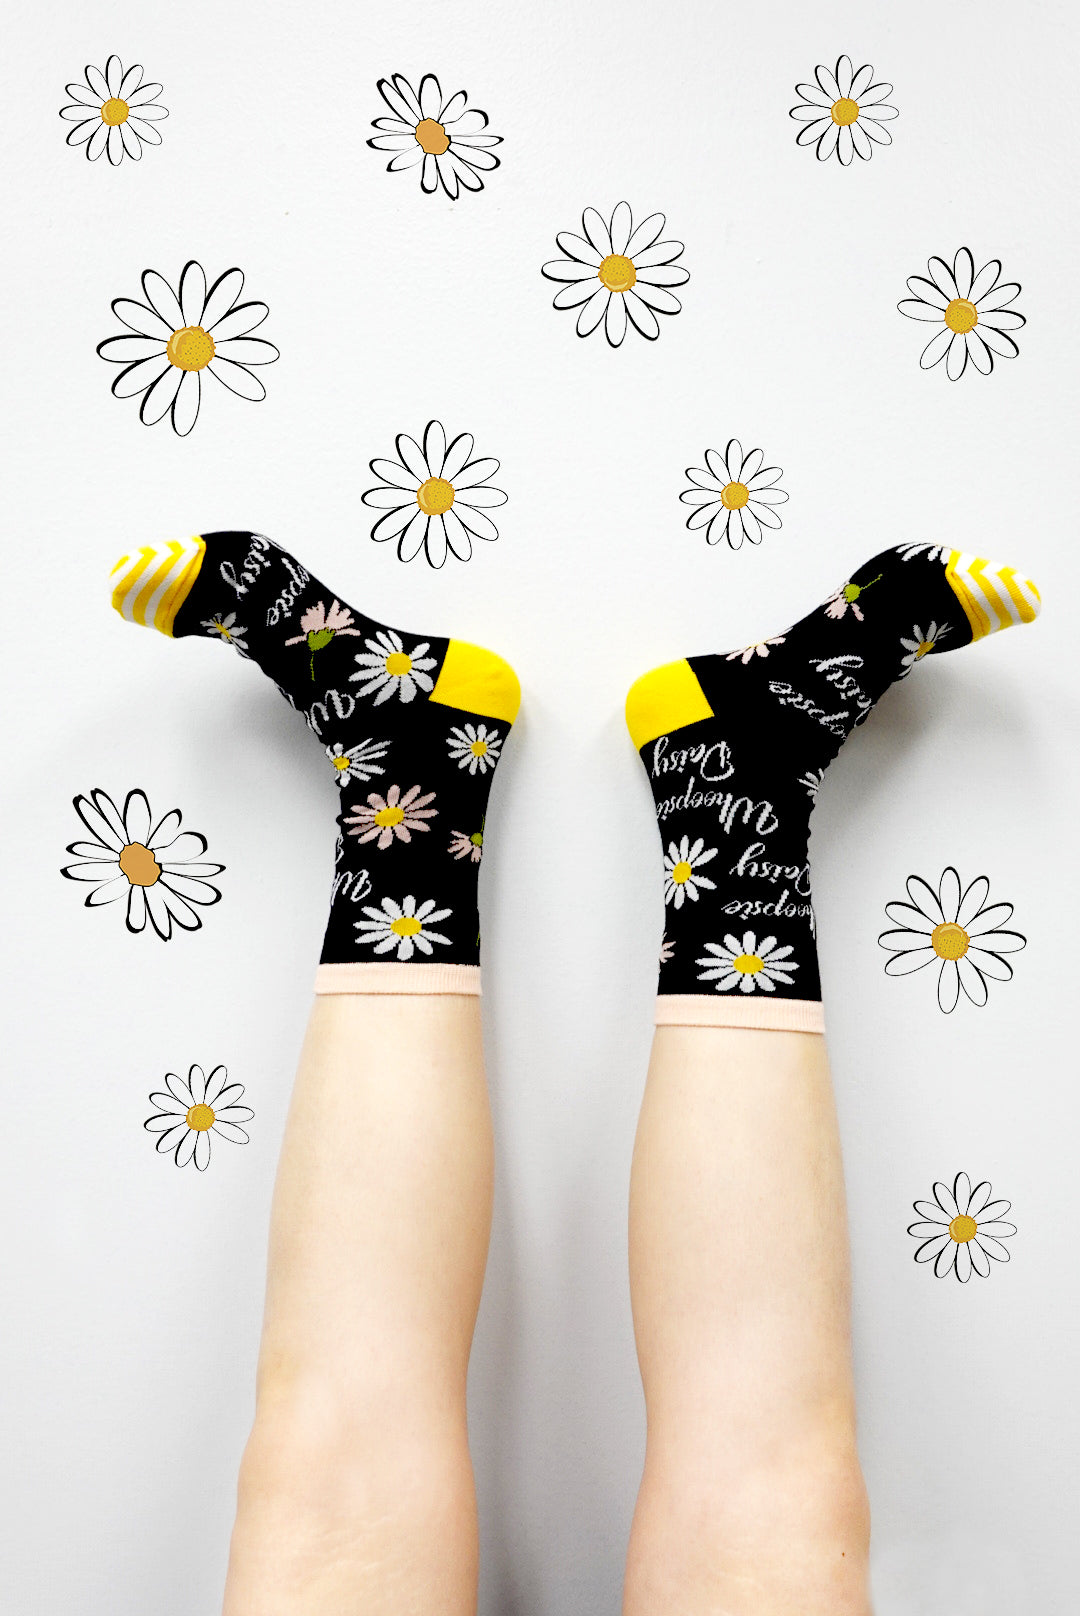  cool future socks Women Funny Socks Novelty Socks